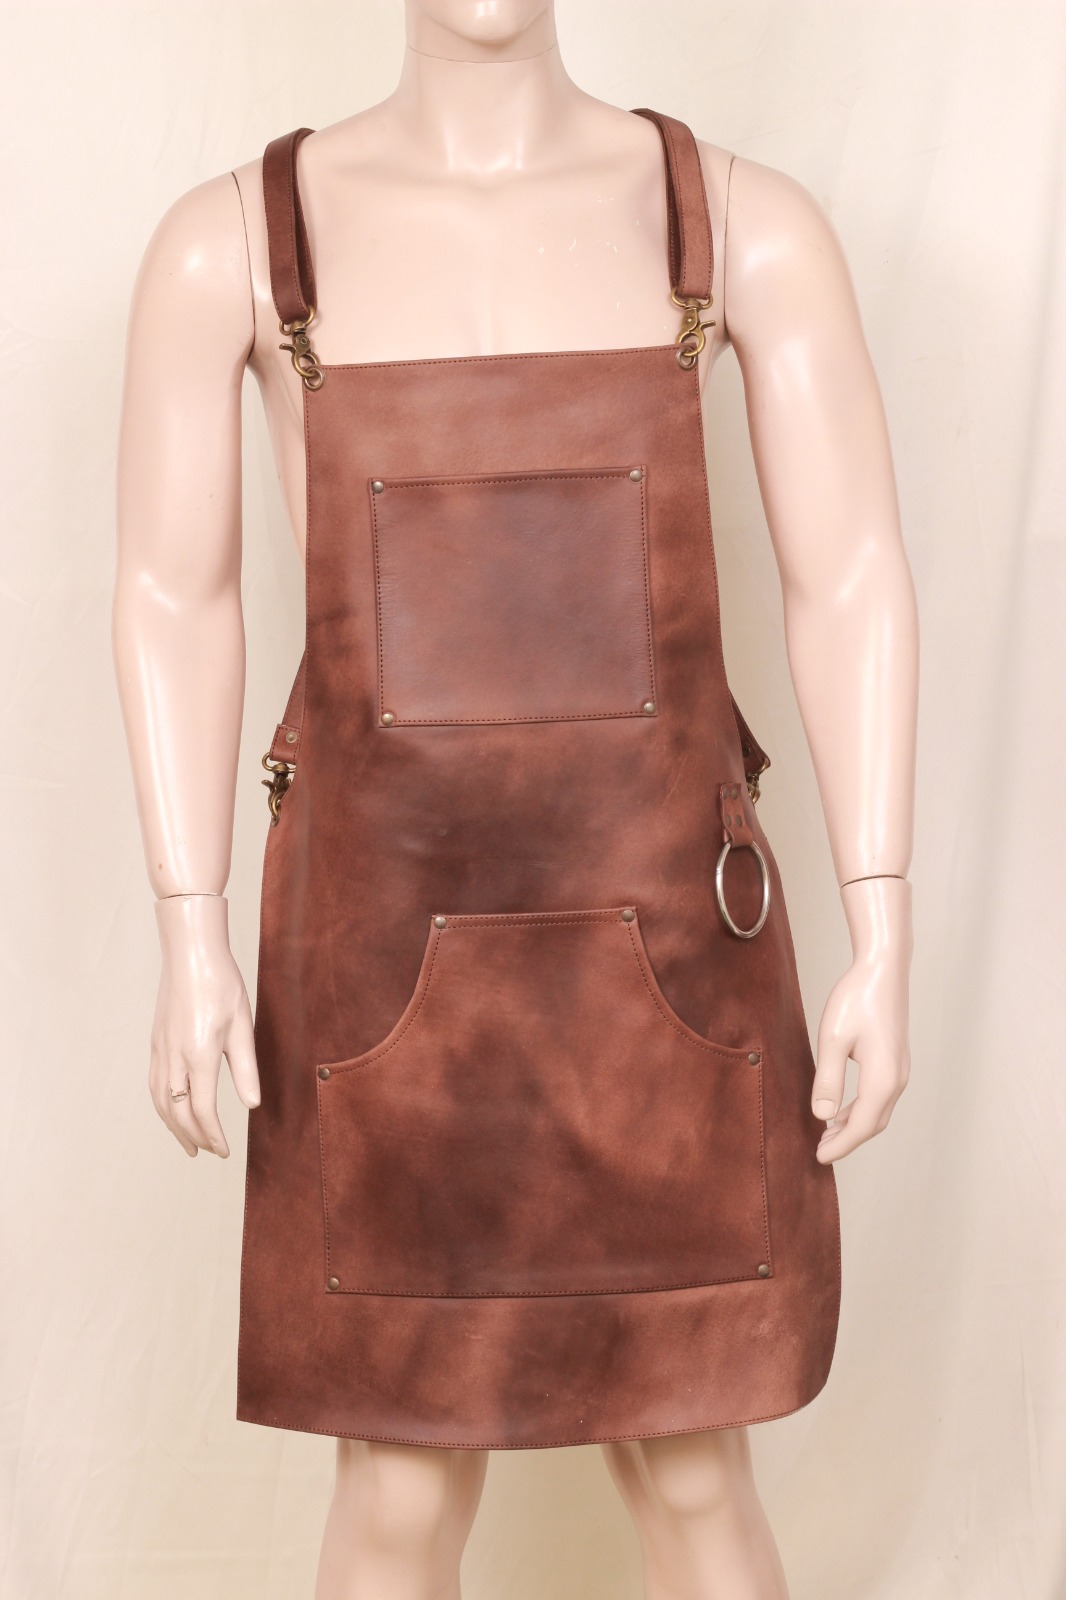 leather apron, crossback leather apron